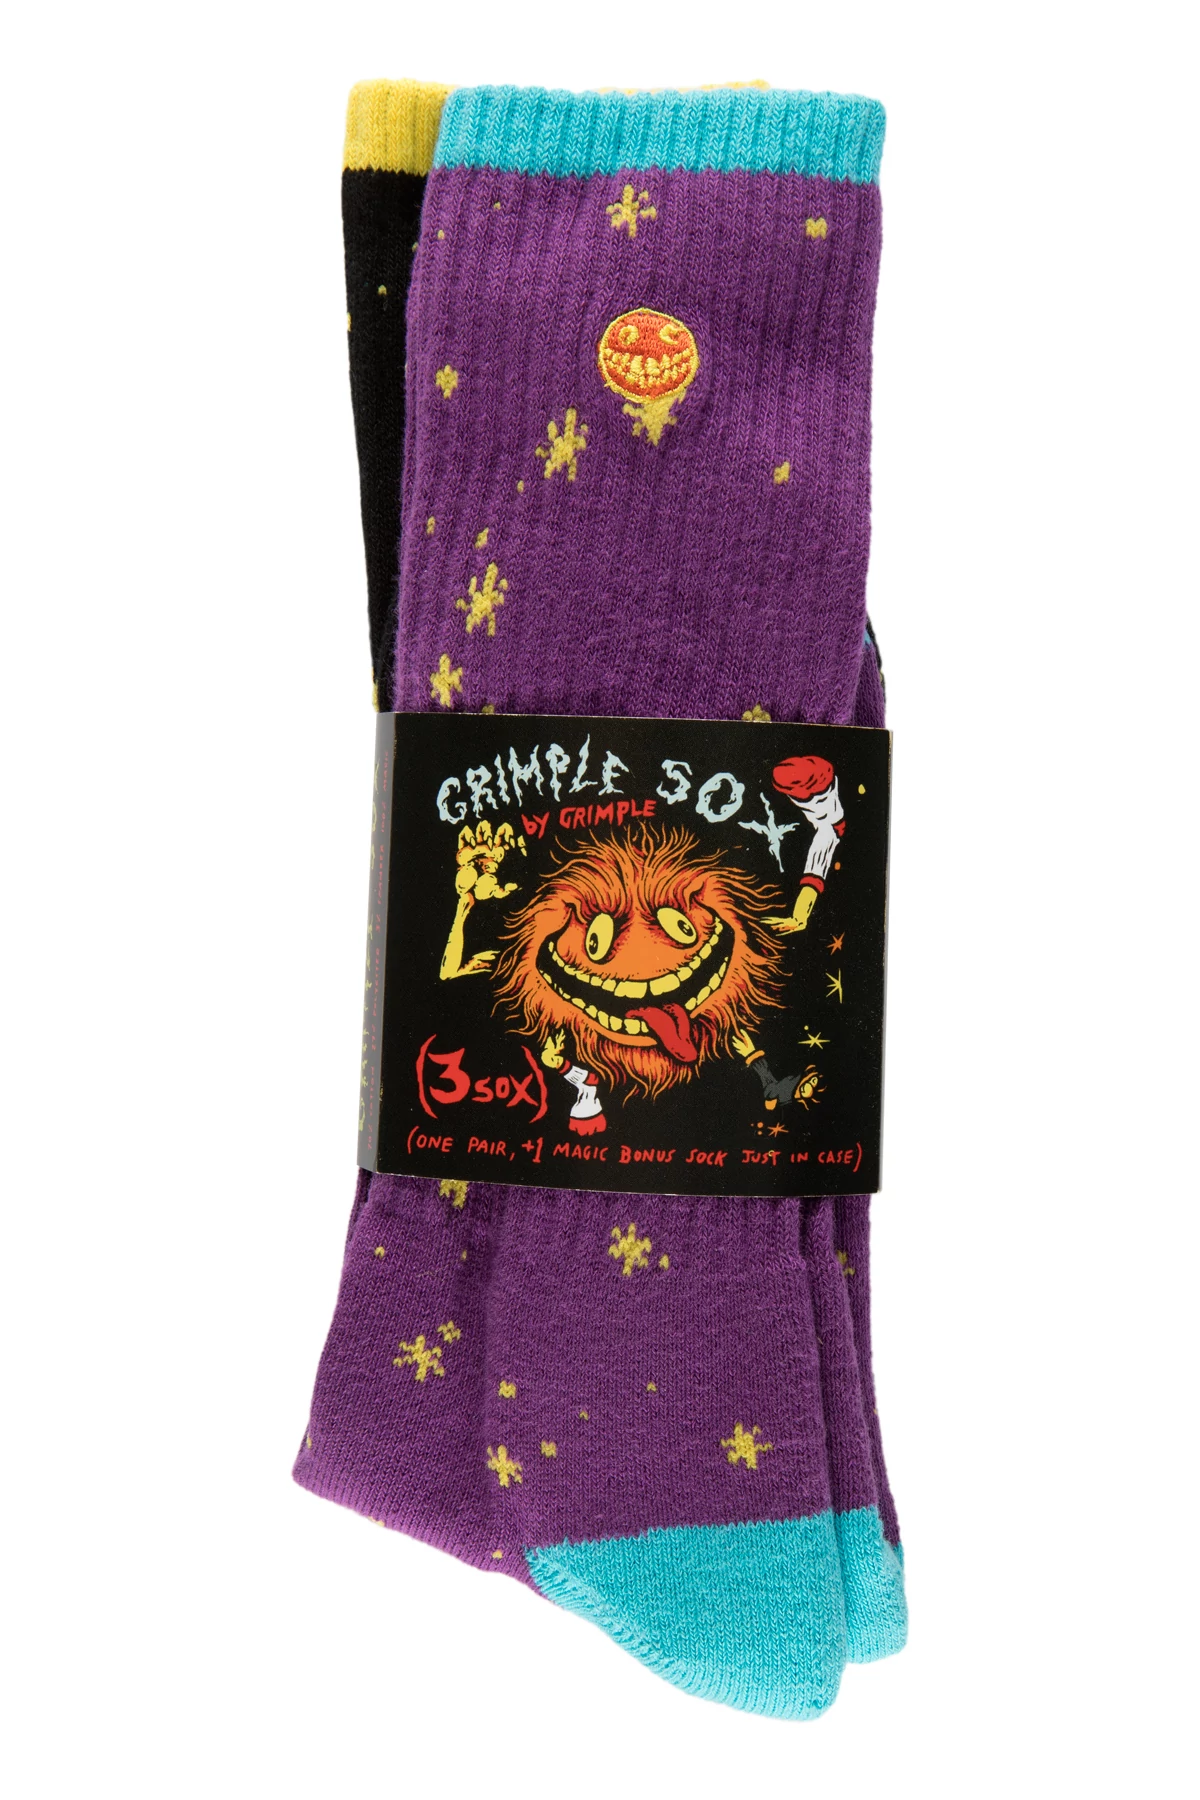 3-Pack Dust Grimple Stix Skateboard Socks